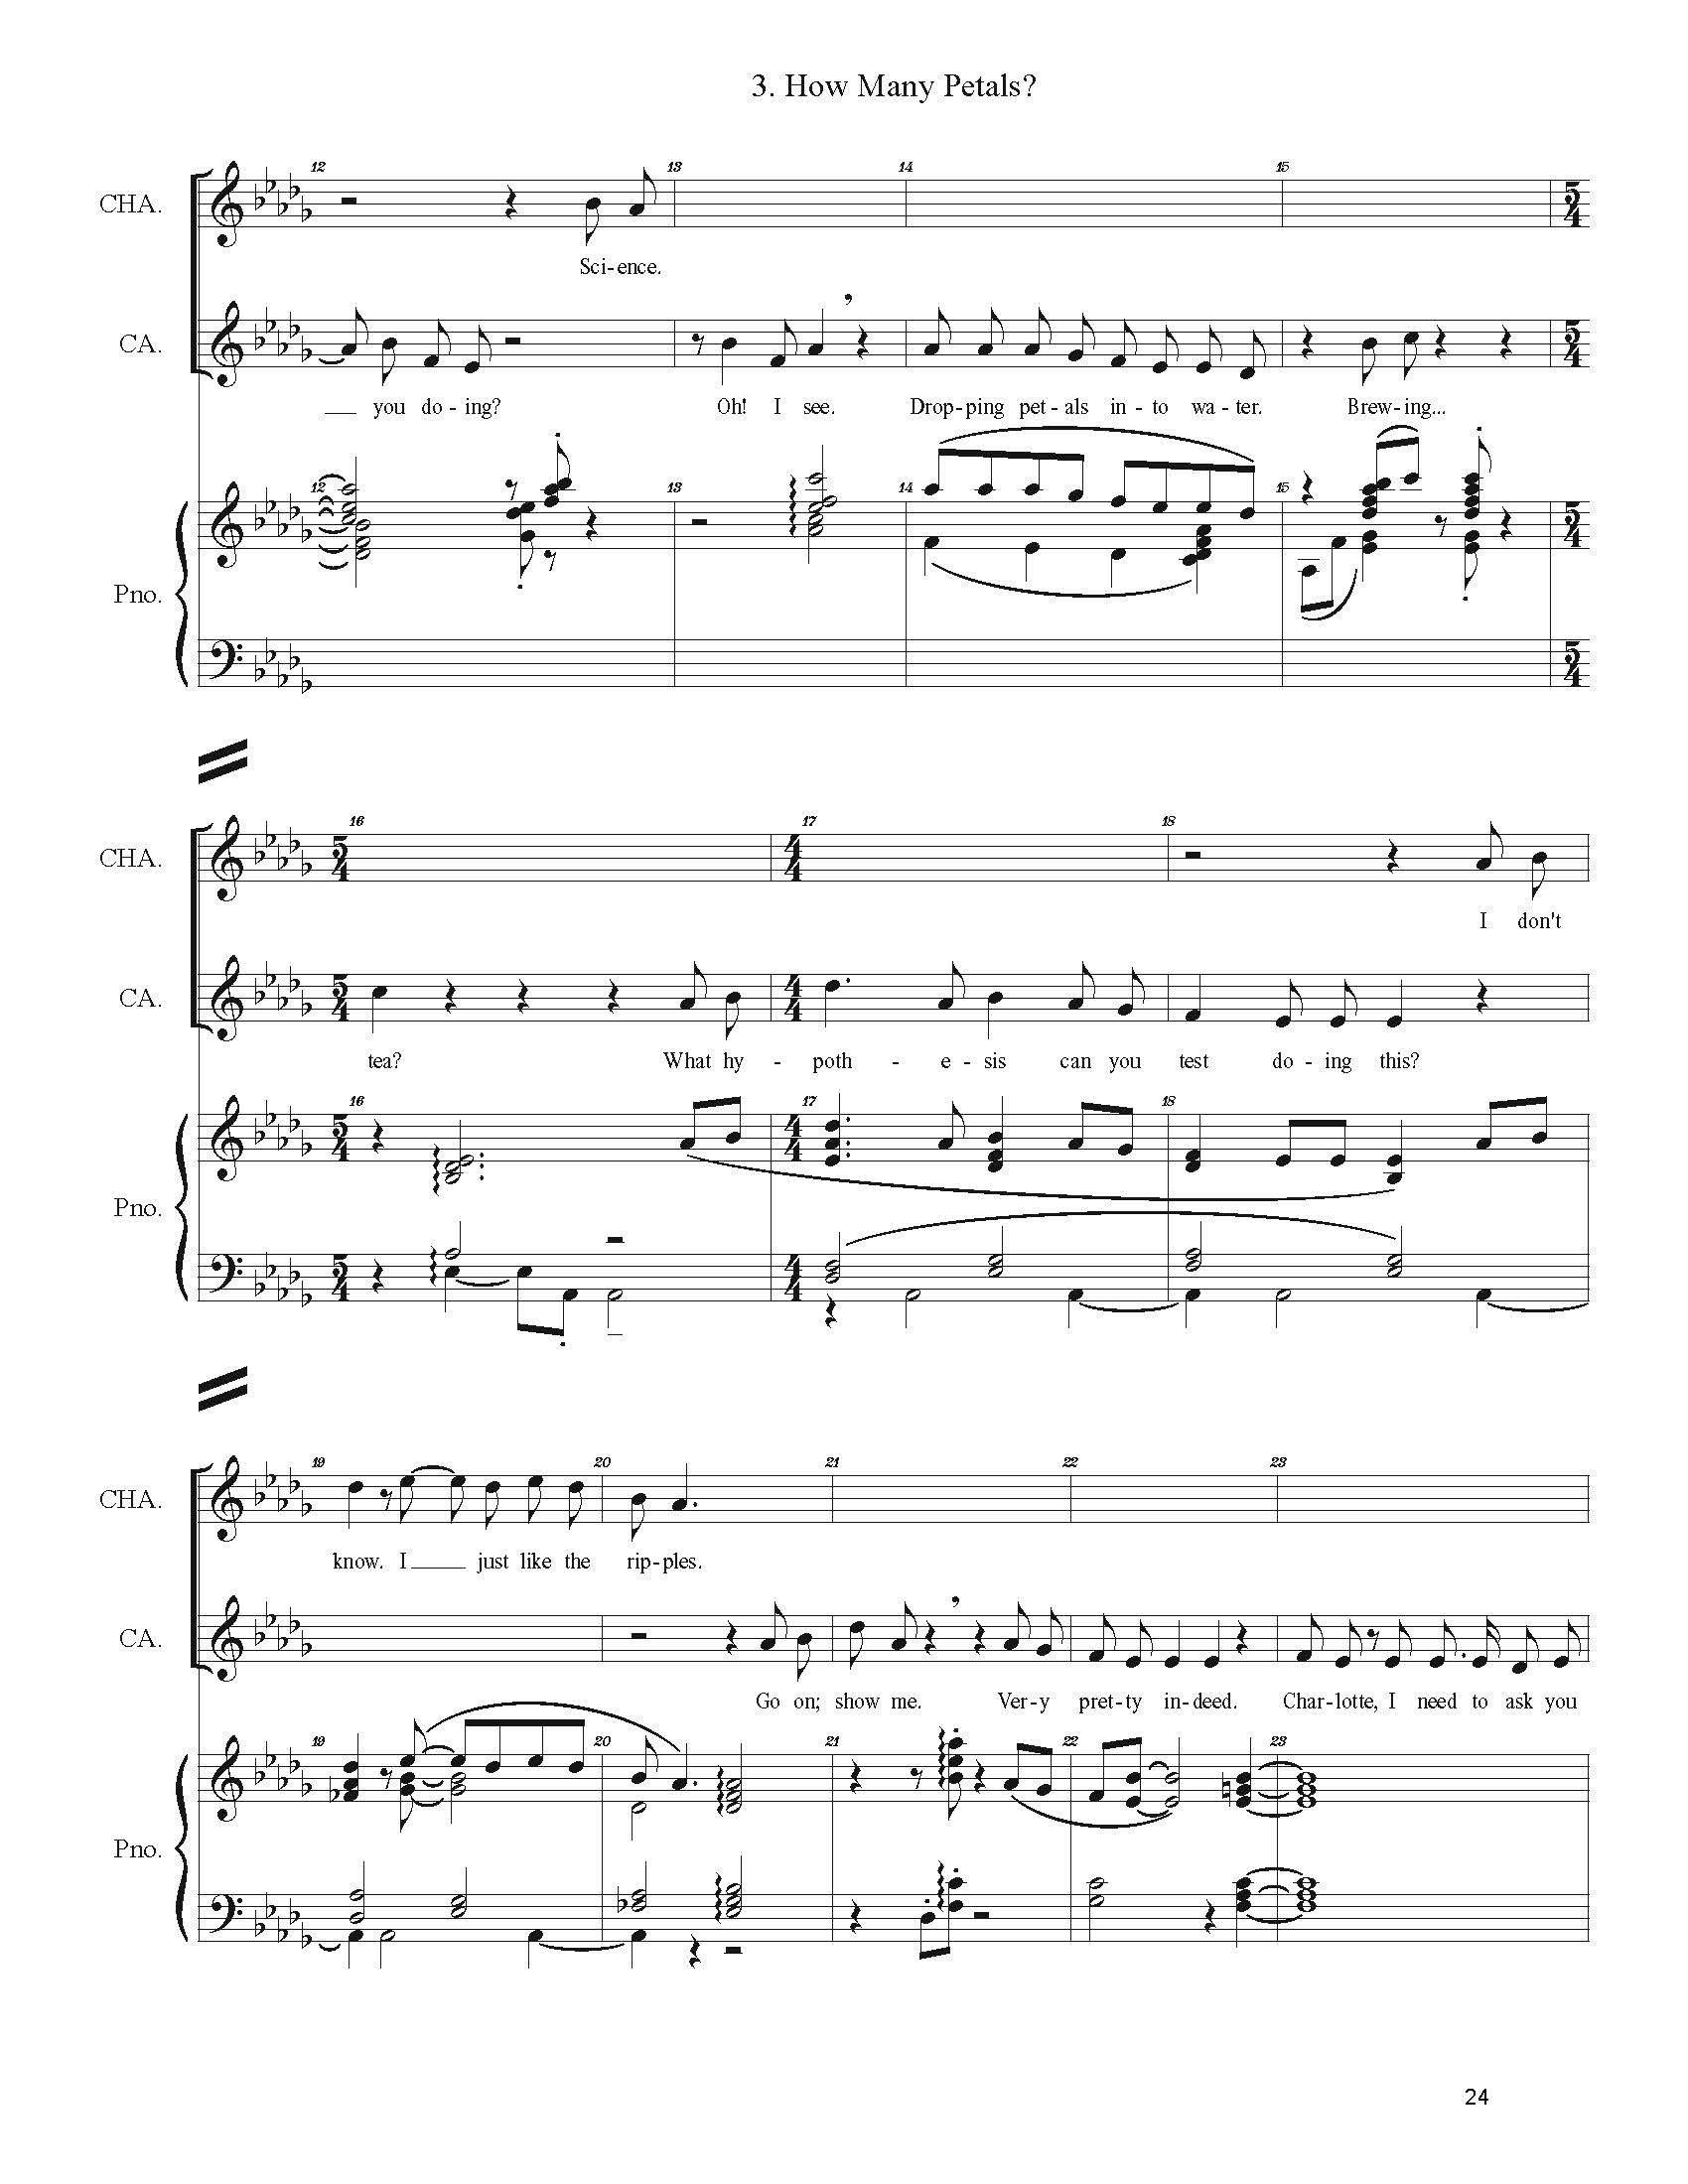 FULL PIANO VOCAL SCORE DRAFT 1 - Score_Page_024.jpg